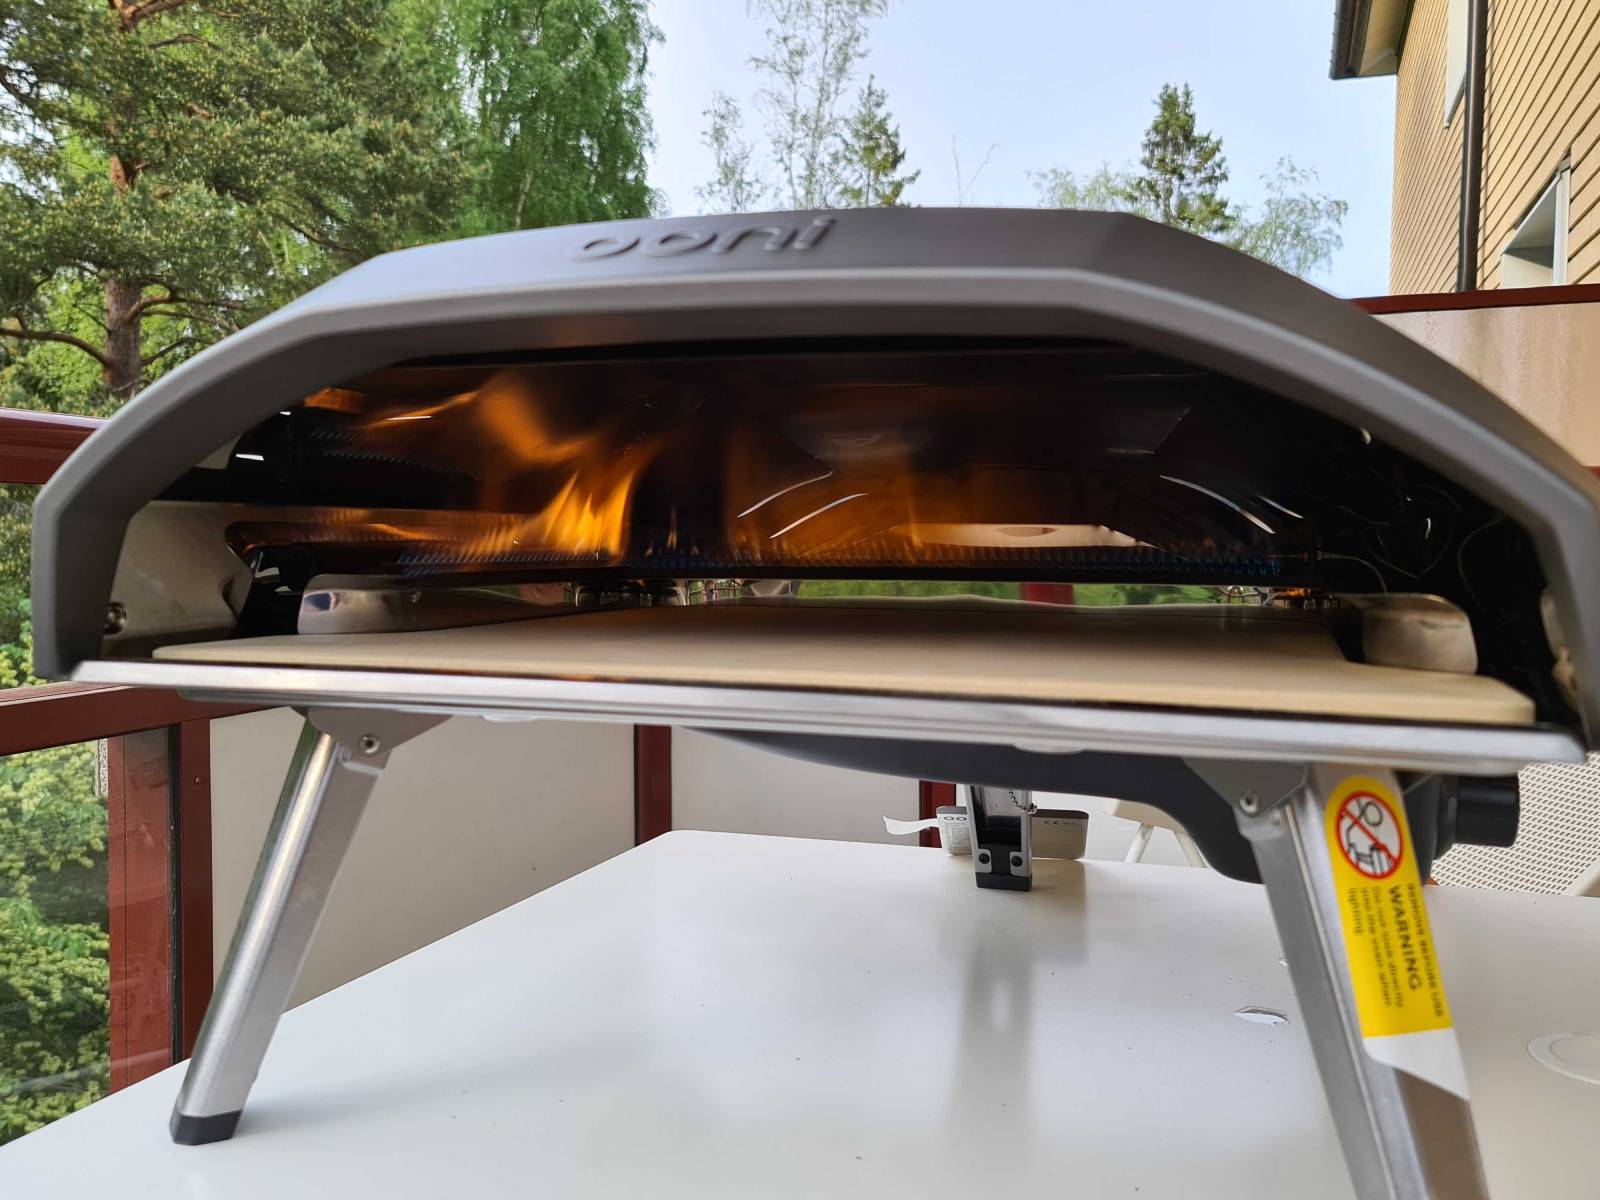 Koda 16 Gas Powered Outdoor Pizza Oven